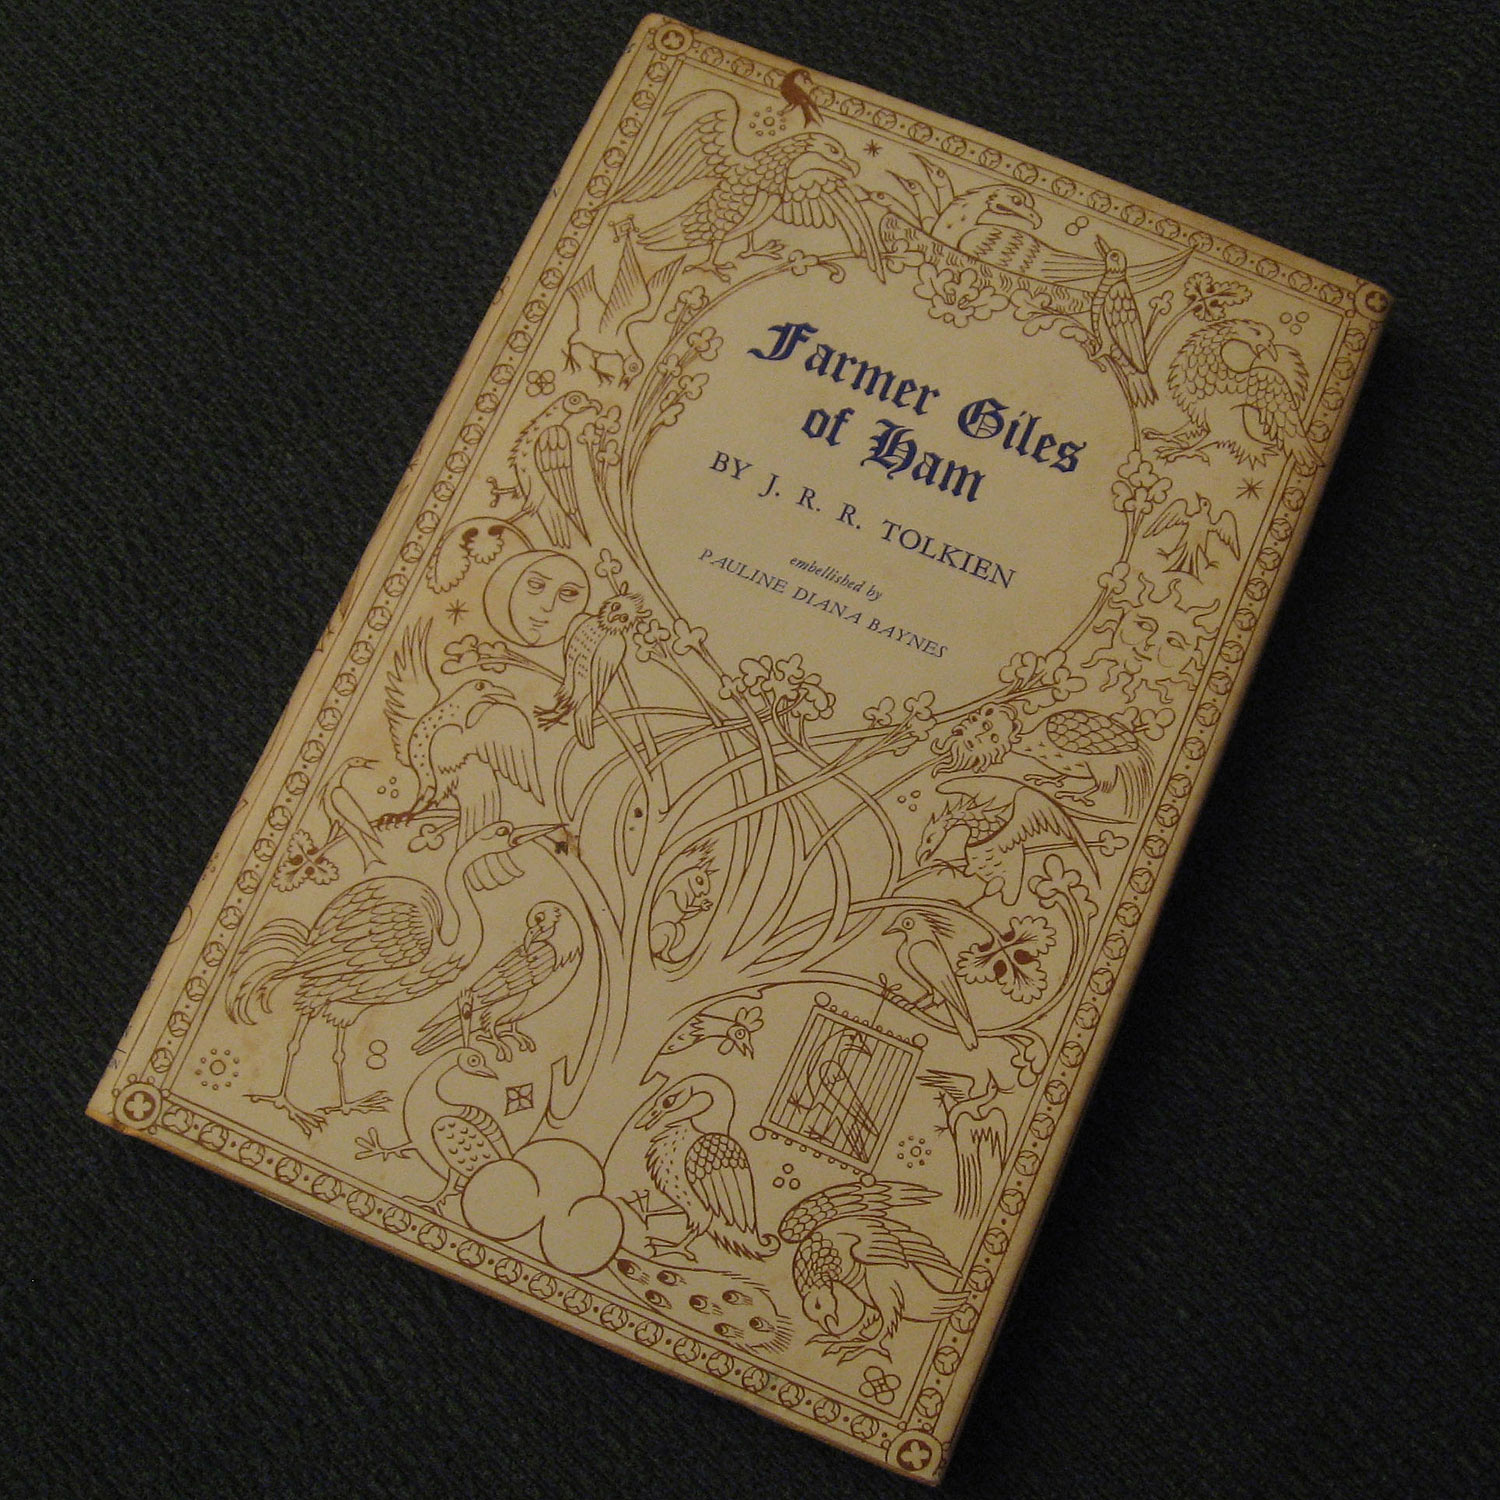 Farmer Giles of Ham | Première édition anglaise chez George Allen and Unwin